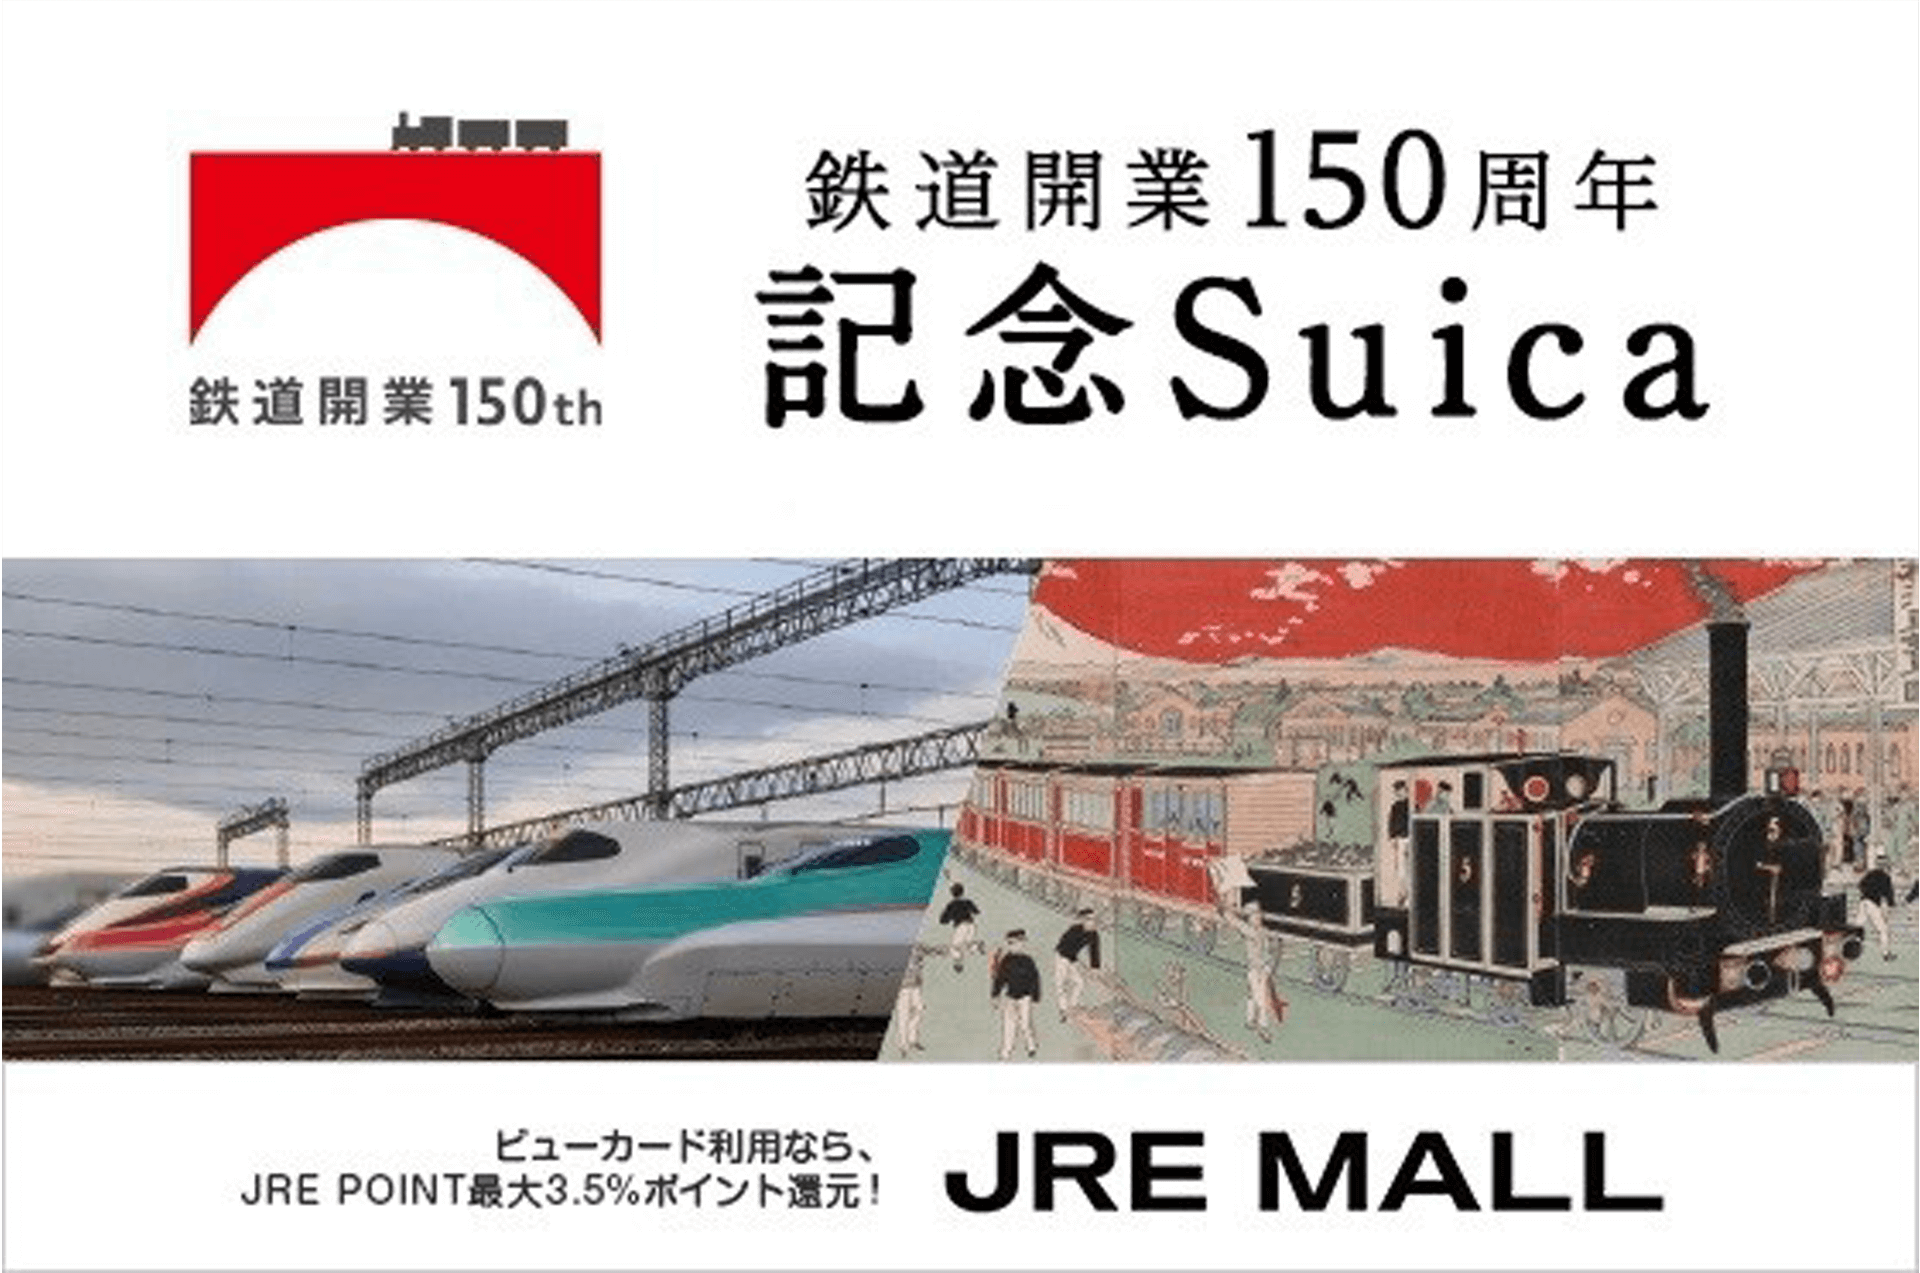 JR東日本 鉄道開業150周年 記念Suica 【超目玉枠】 sandorobotics.com